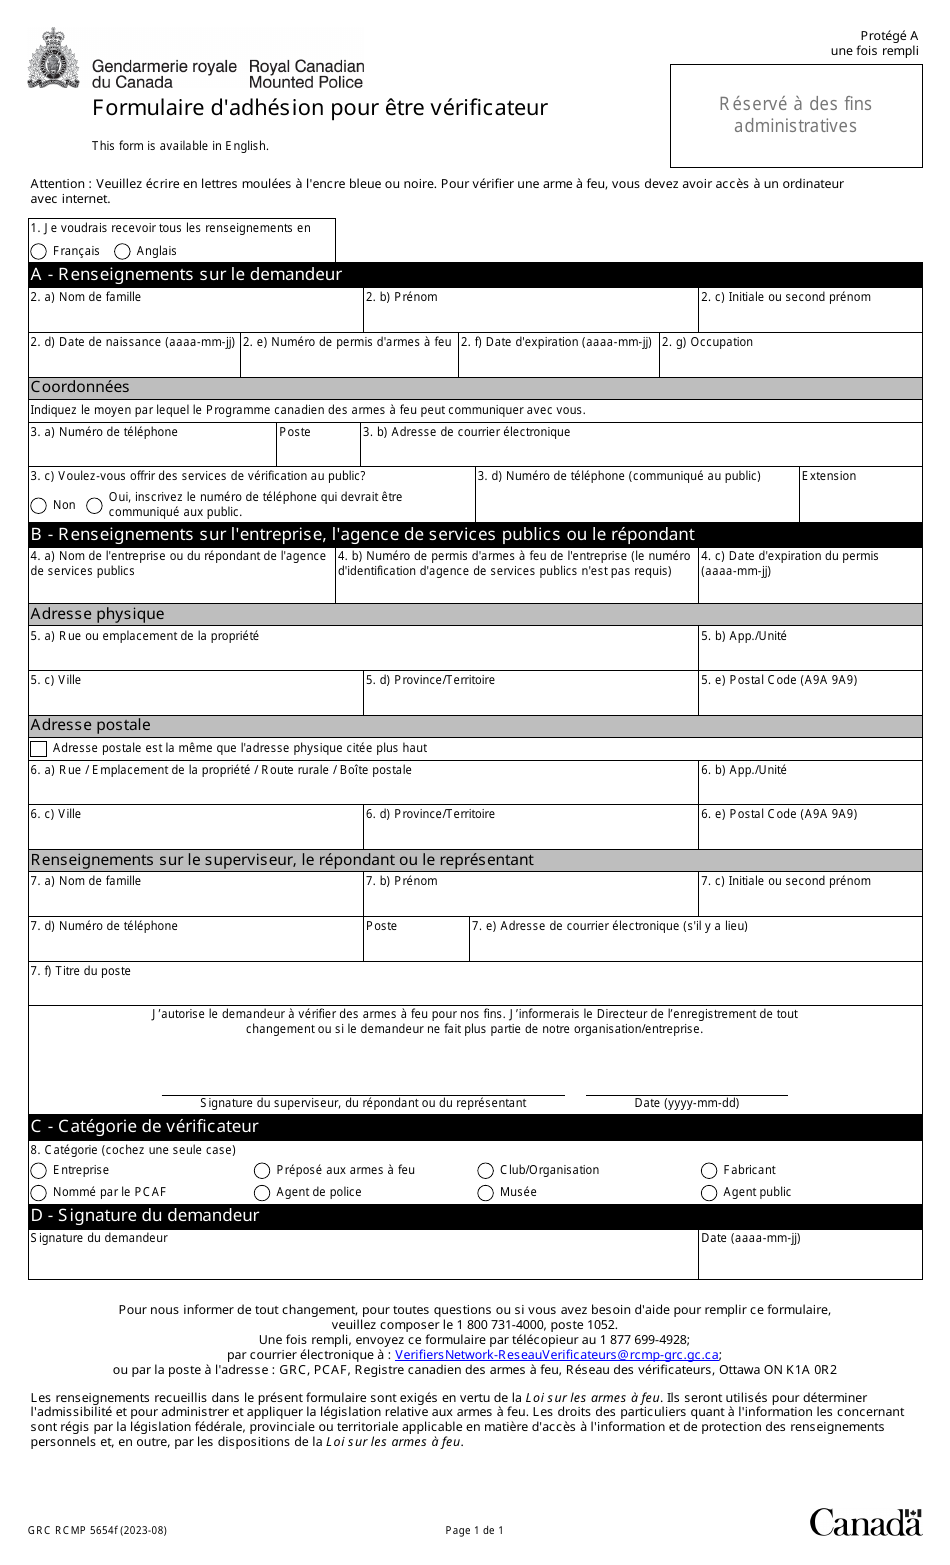 Forme GRC RCMP5654 Formulaire Dadhesion Pour Etre Verificateur - Canada (French), Page 1